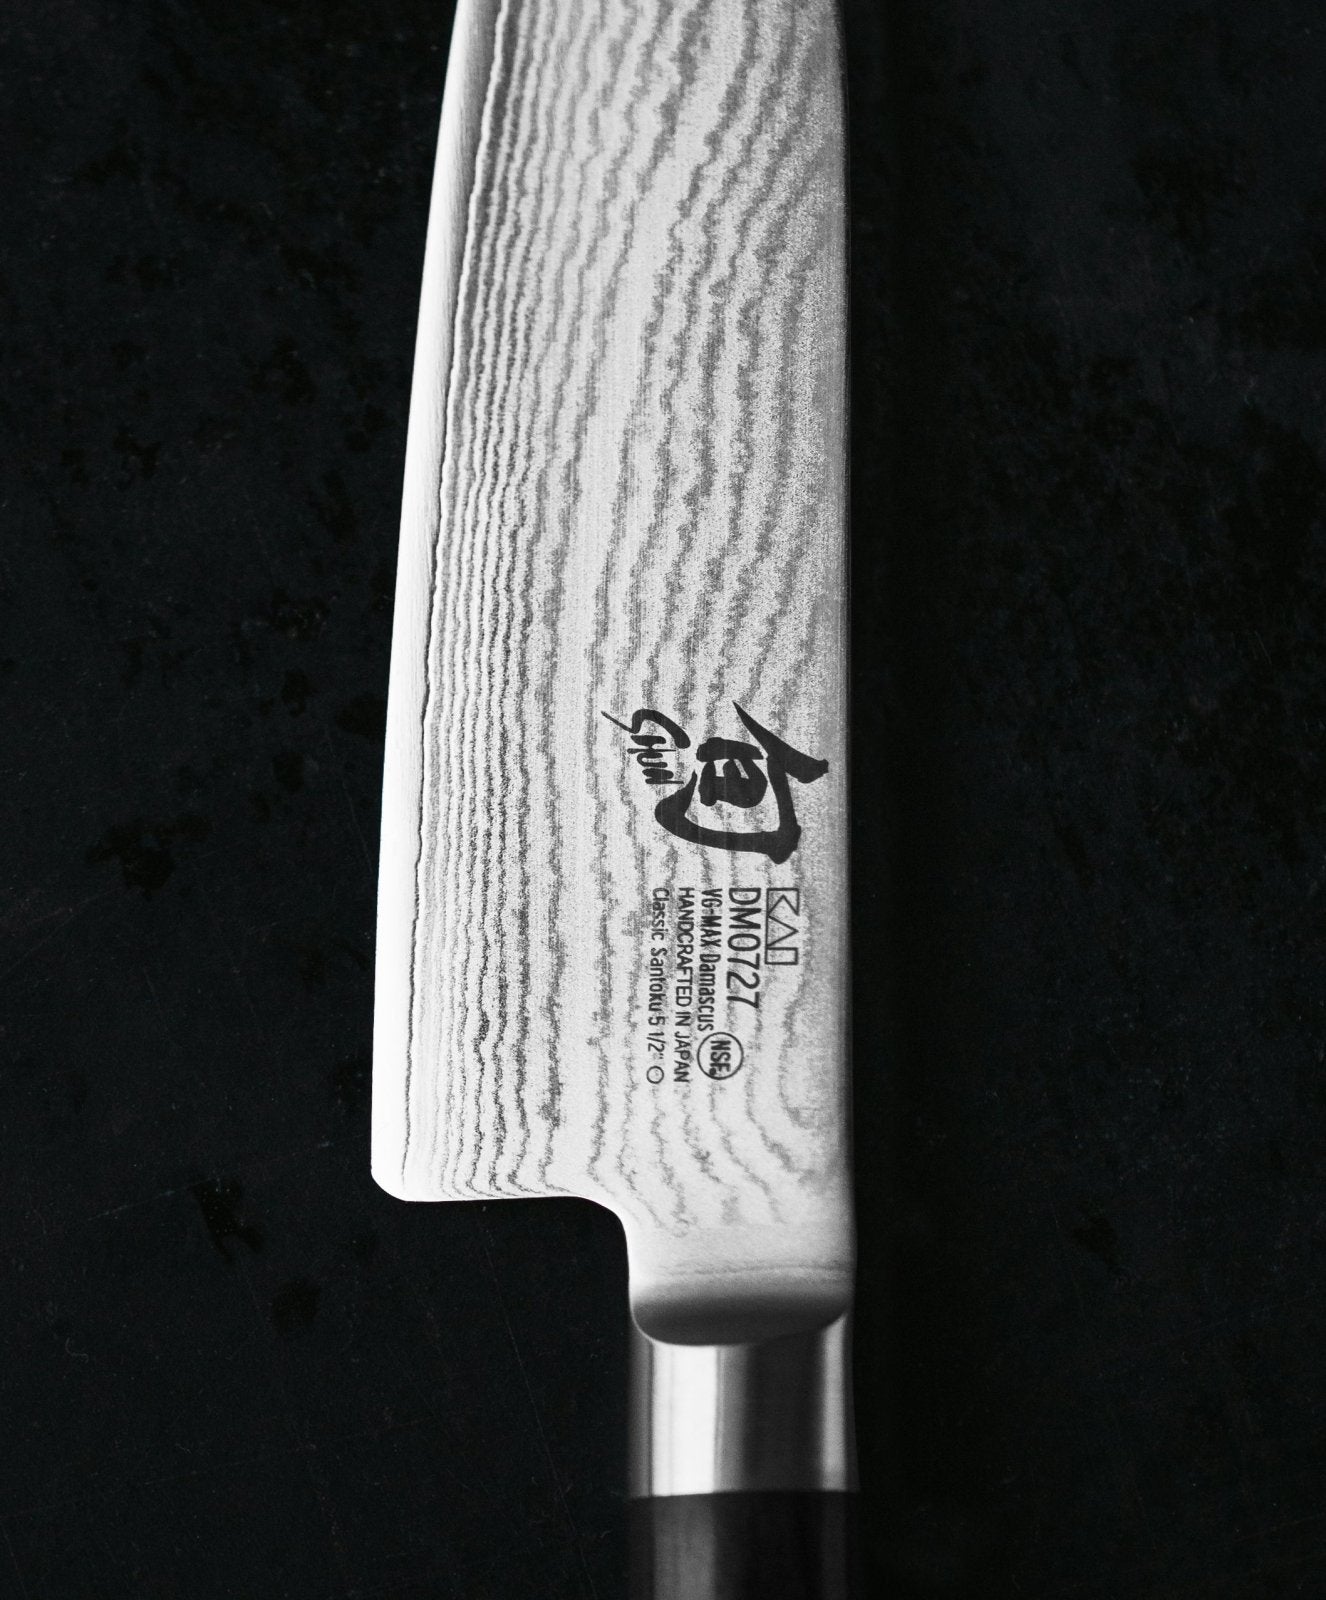 KAI Shun 15cm Utility Knife - KAI-DM-0701 - The Cotswold Knife Company